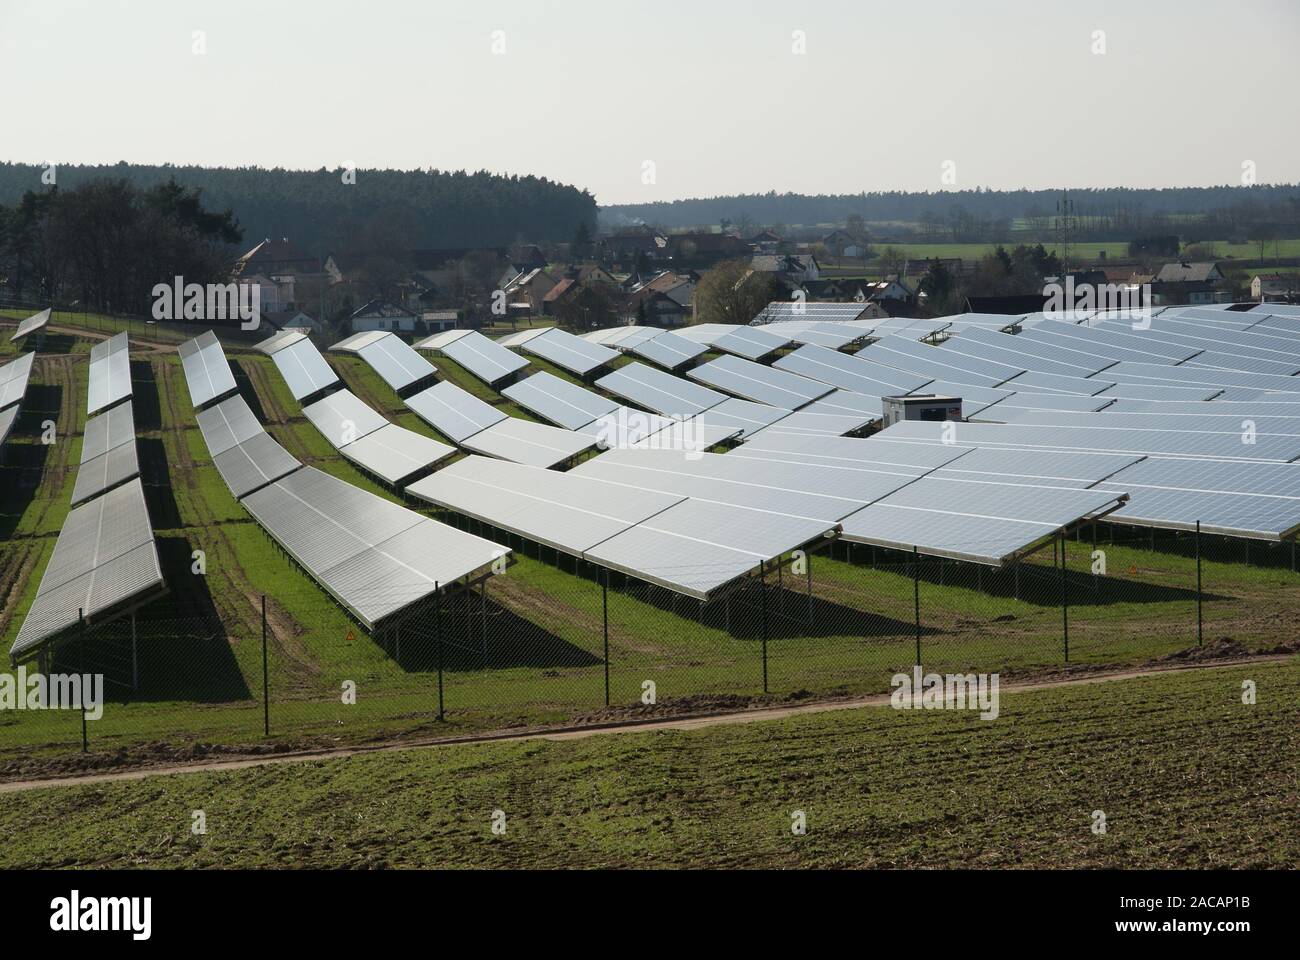 Solar system, photovoltaics Stock Photo